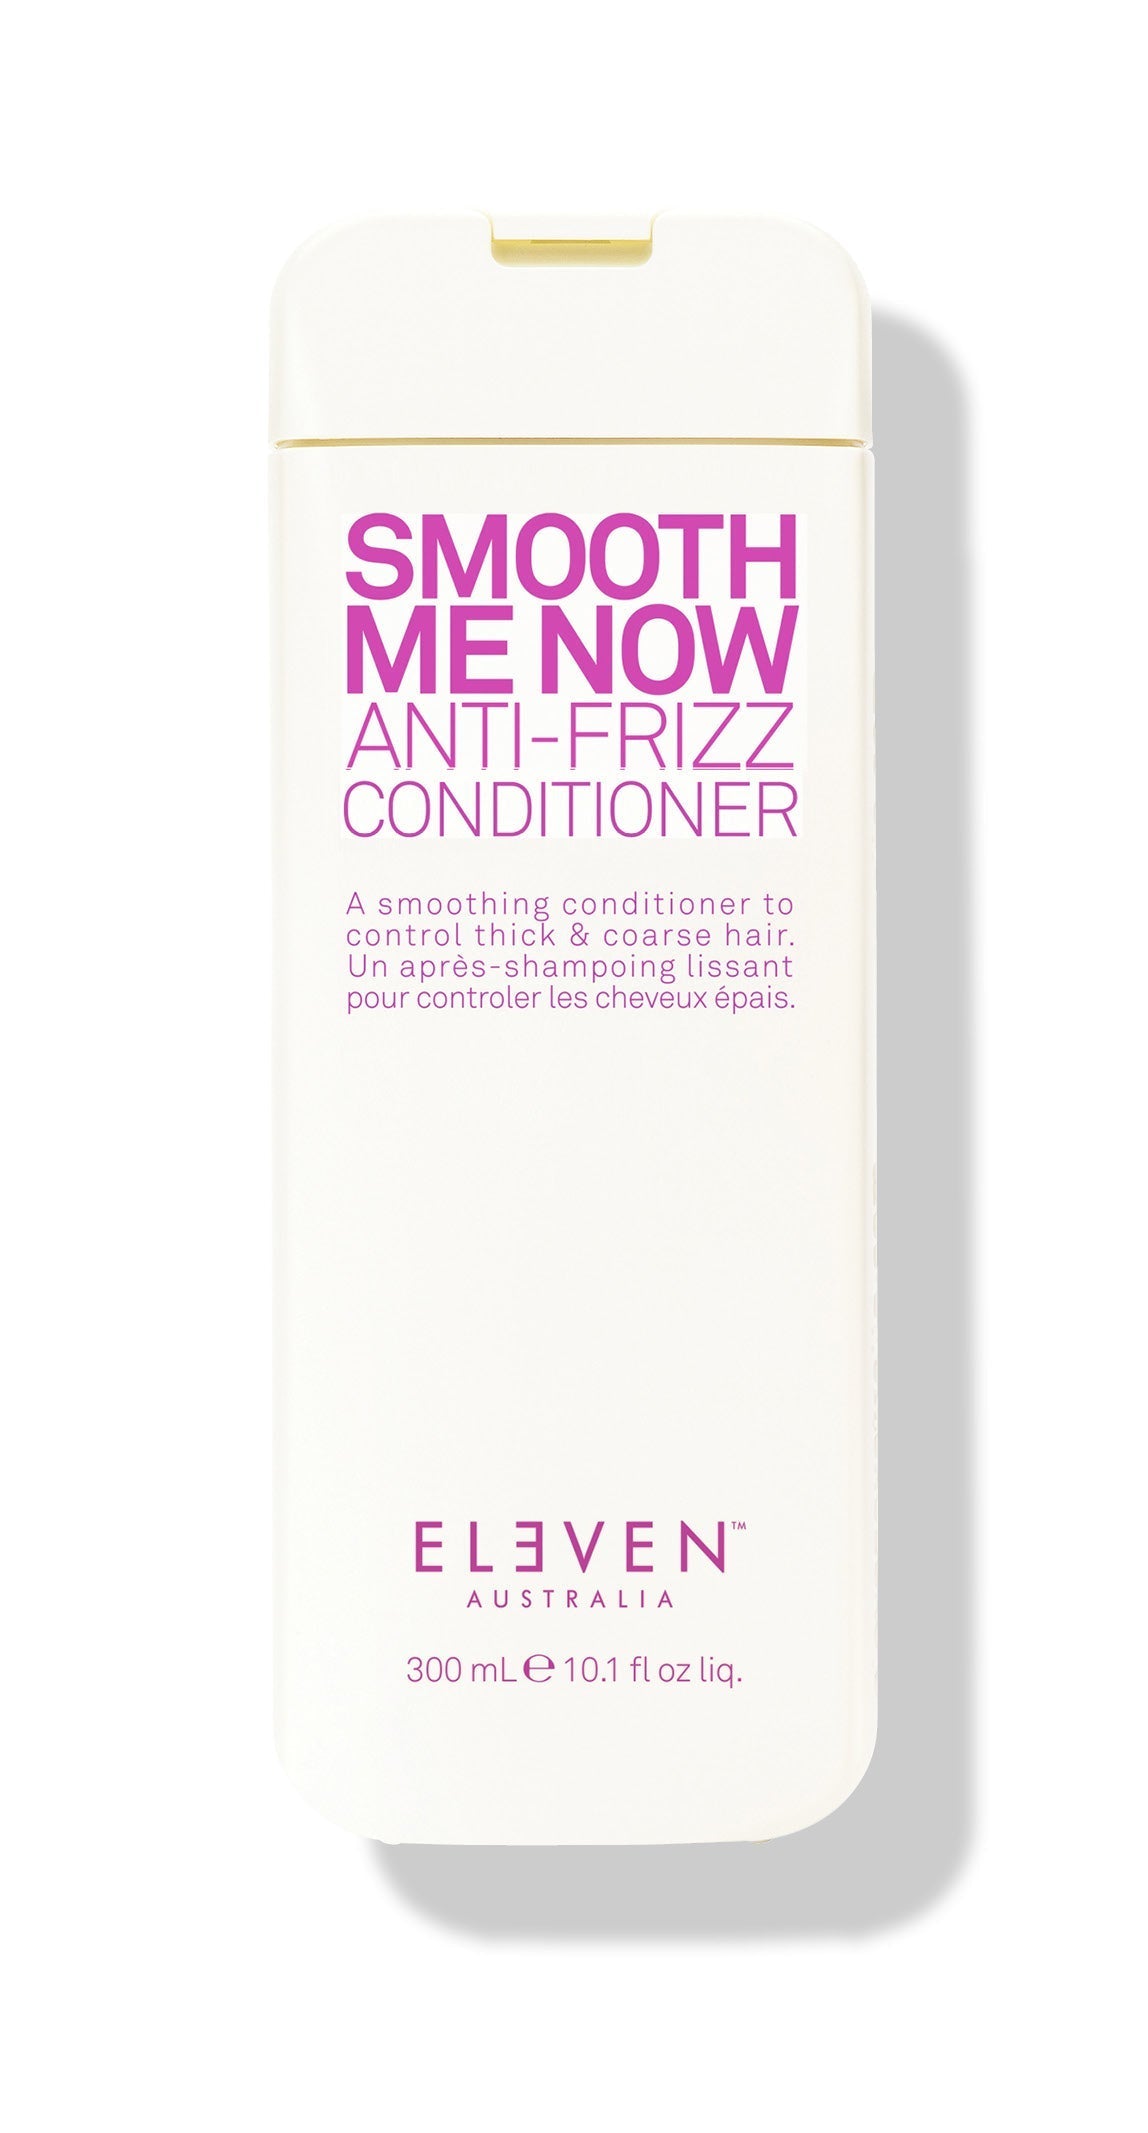 Smooth Me Now  Anti-Frizz Conditioner - 300ml - ELEVEN Australia